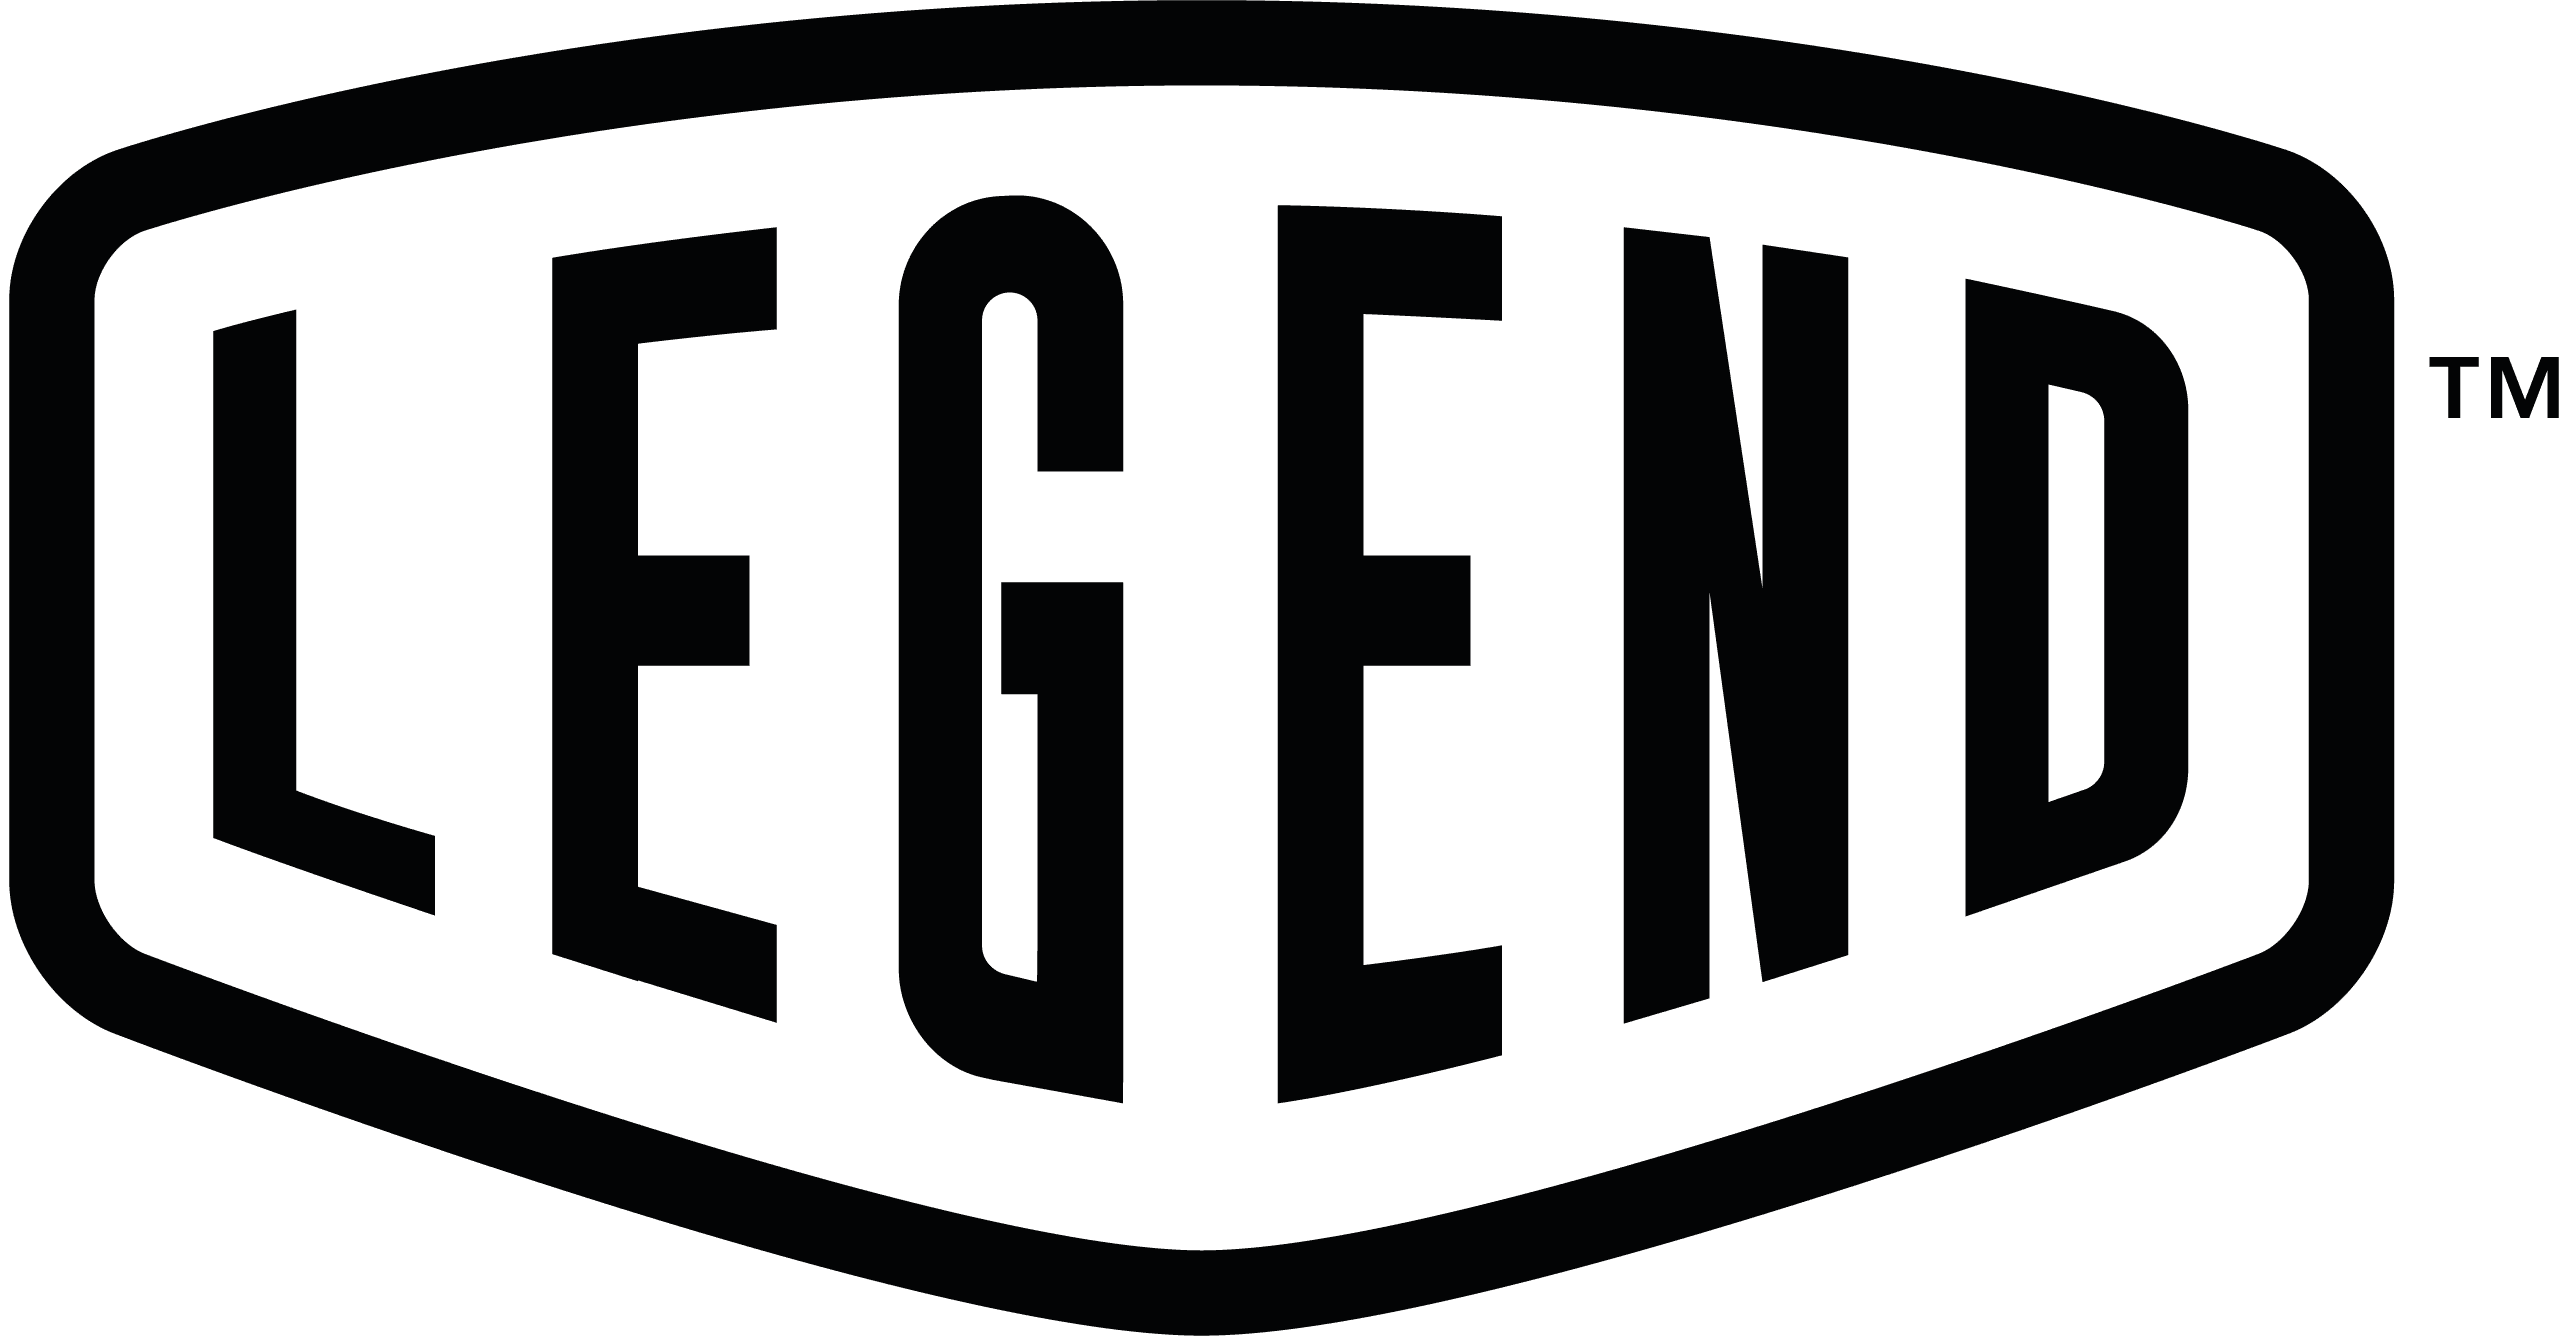 LEGEND Logo - Van lining